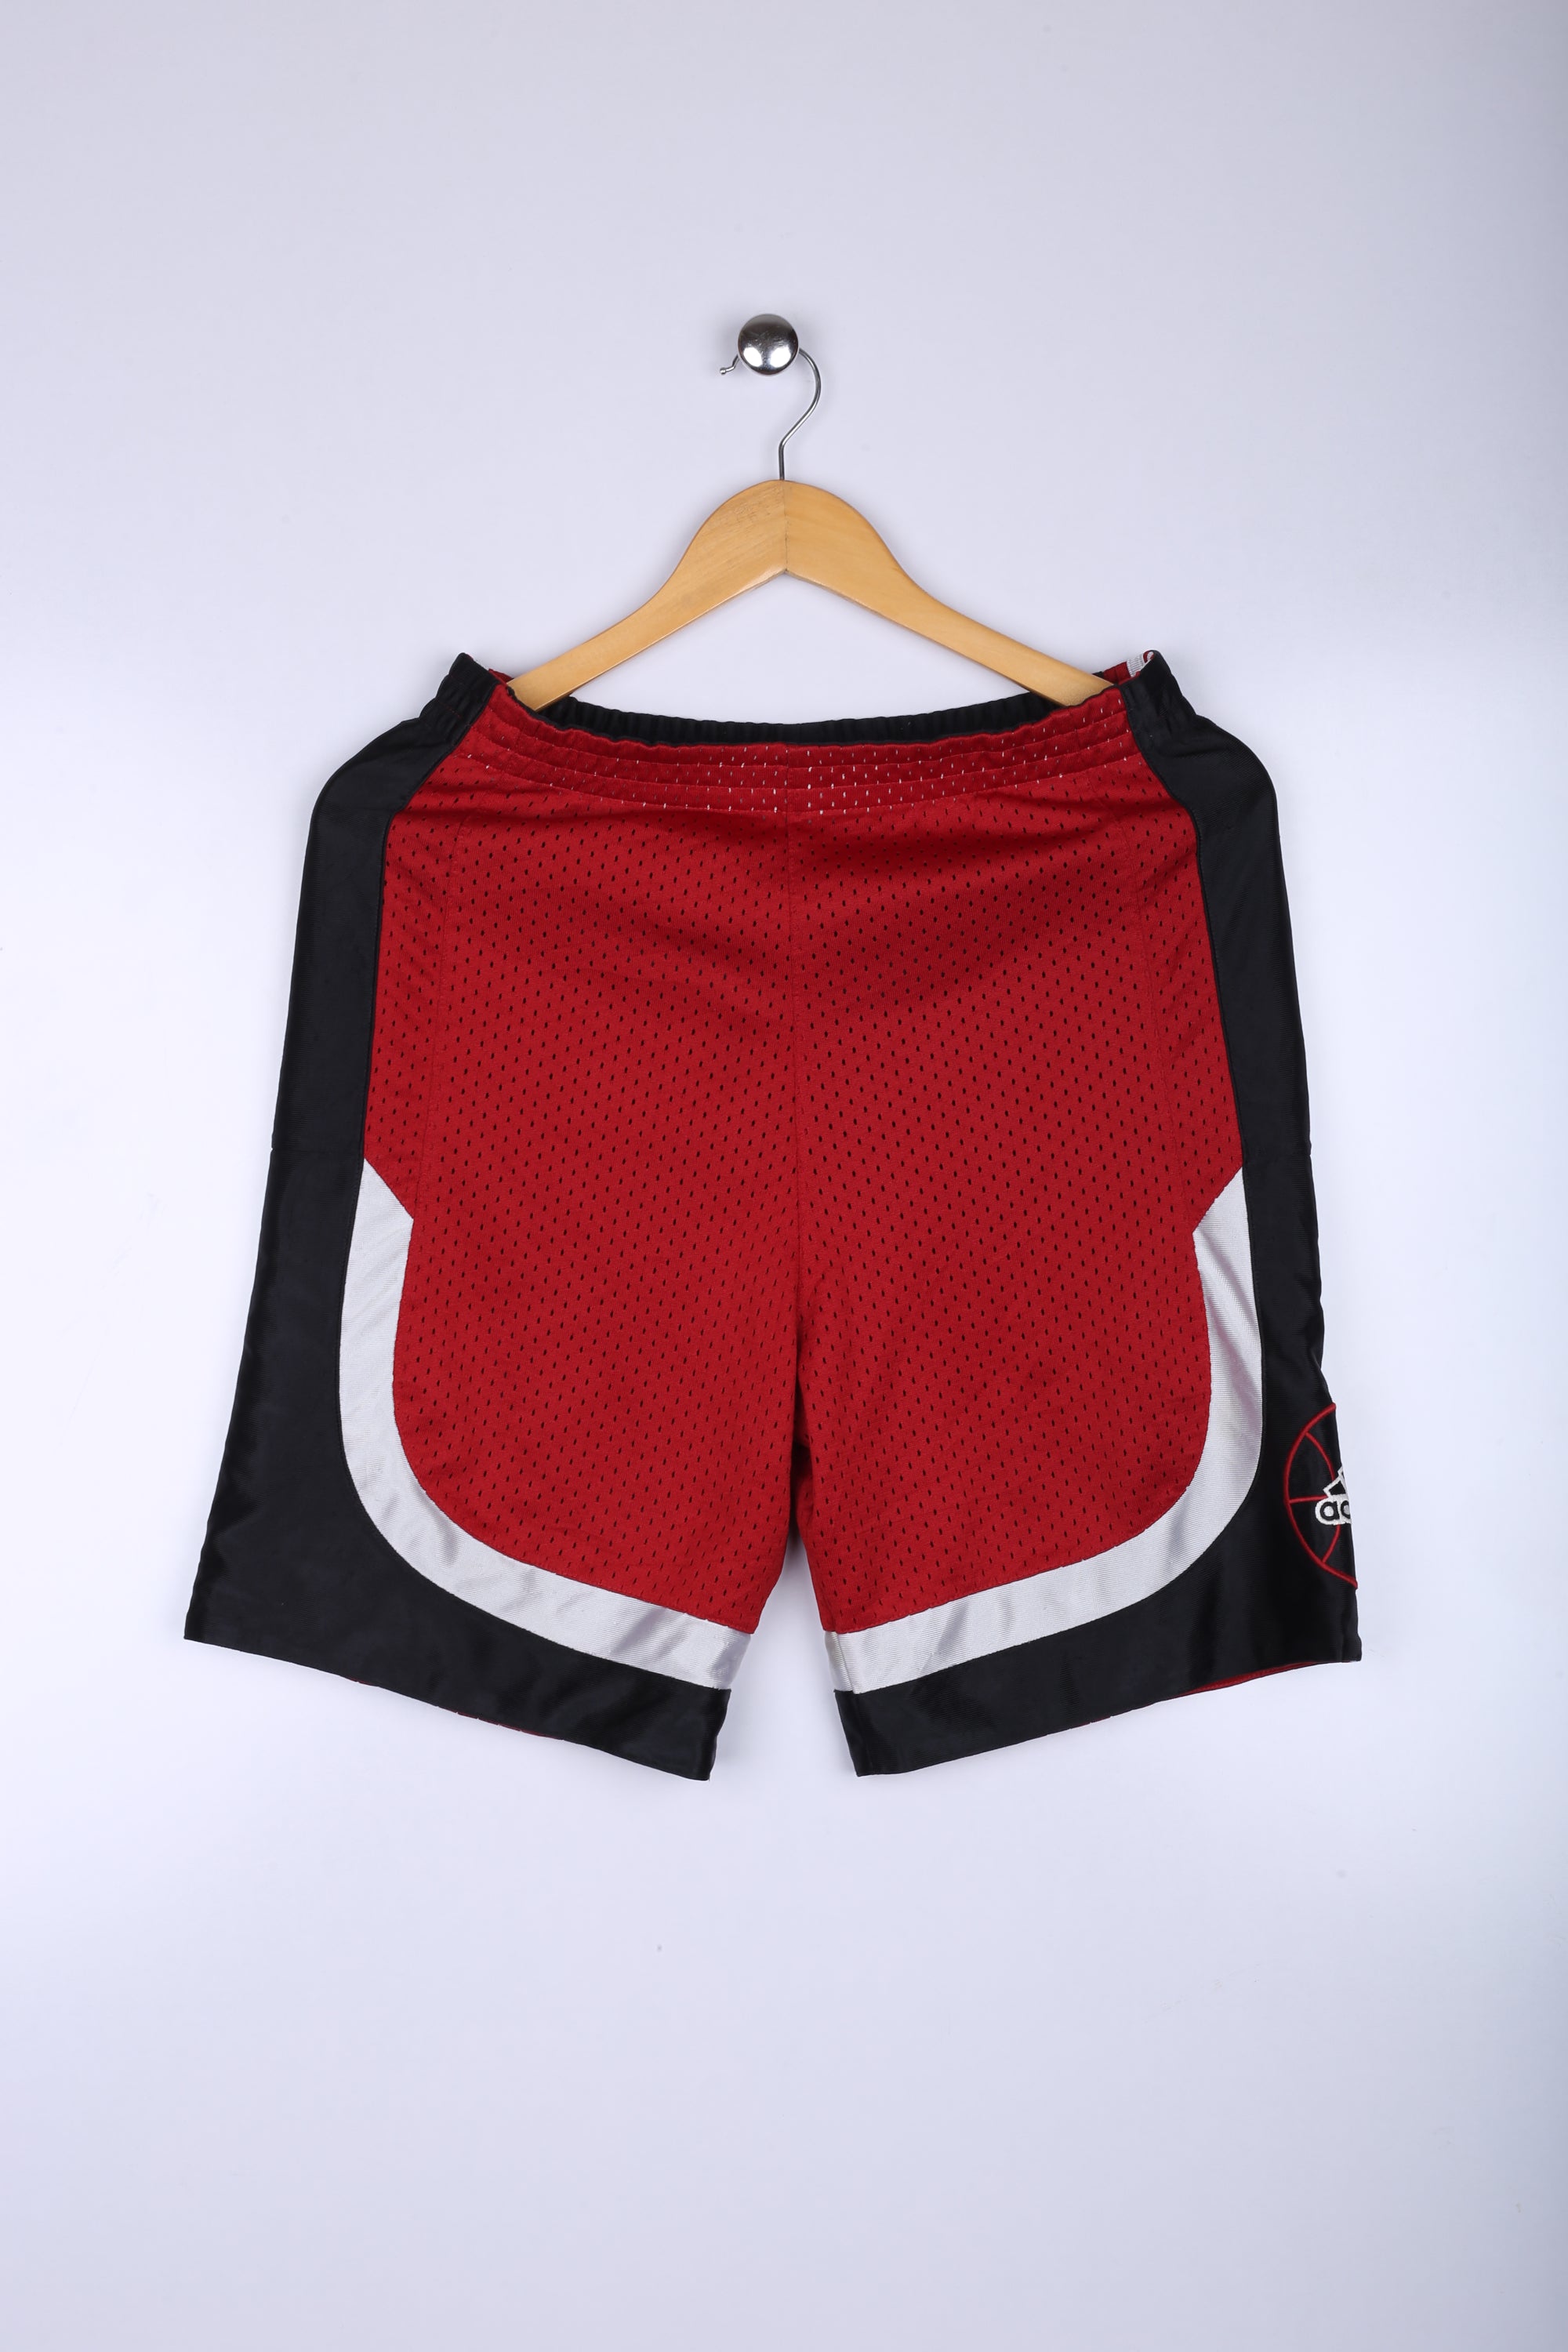 Vintage Adidas Shorts Red/Black